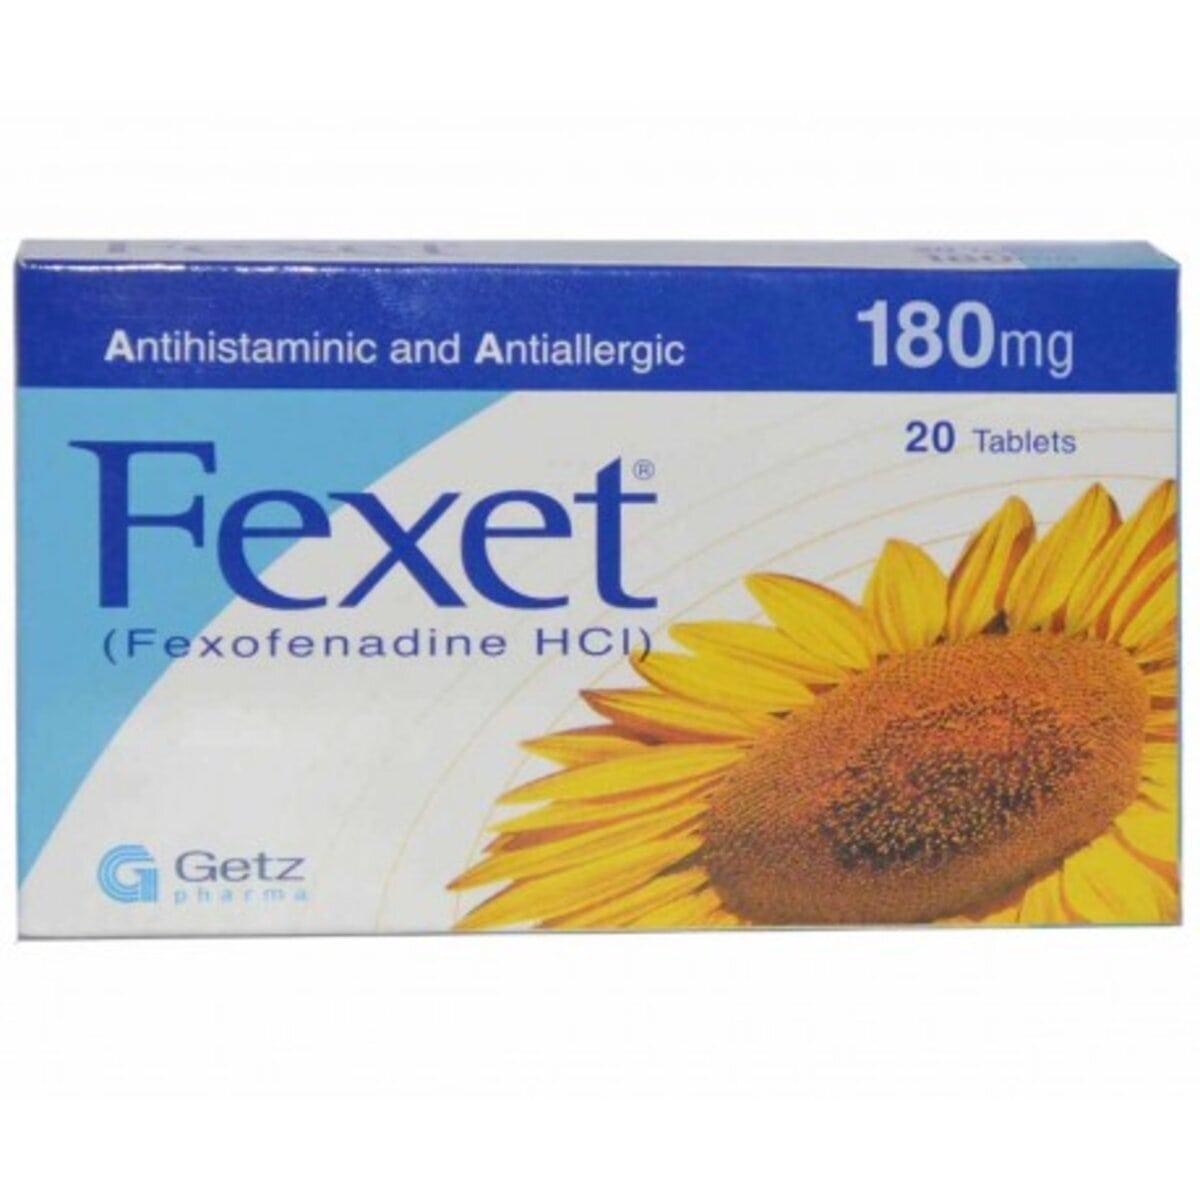 Fexet (Fexofenadine) 180mg Tablets X 20